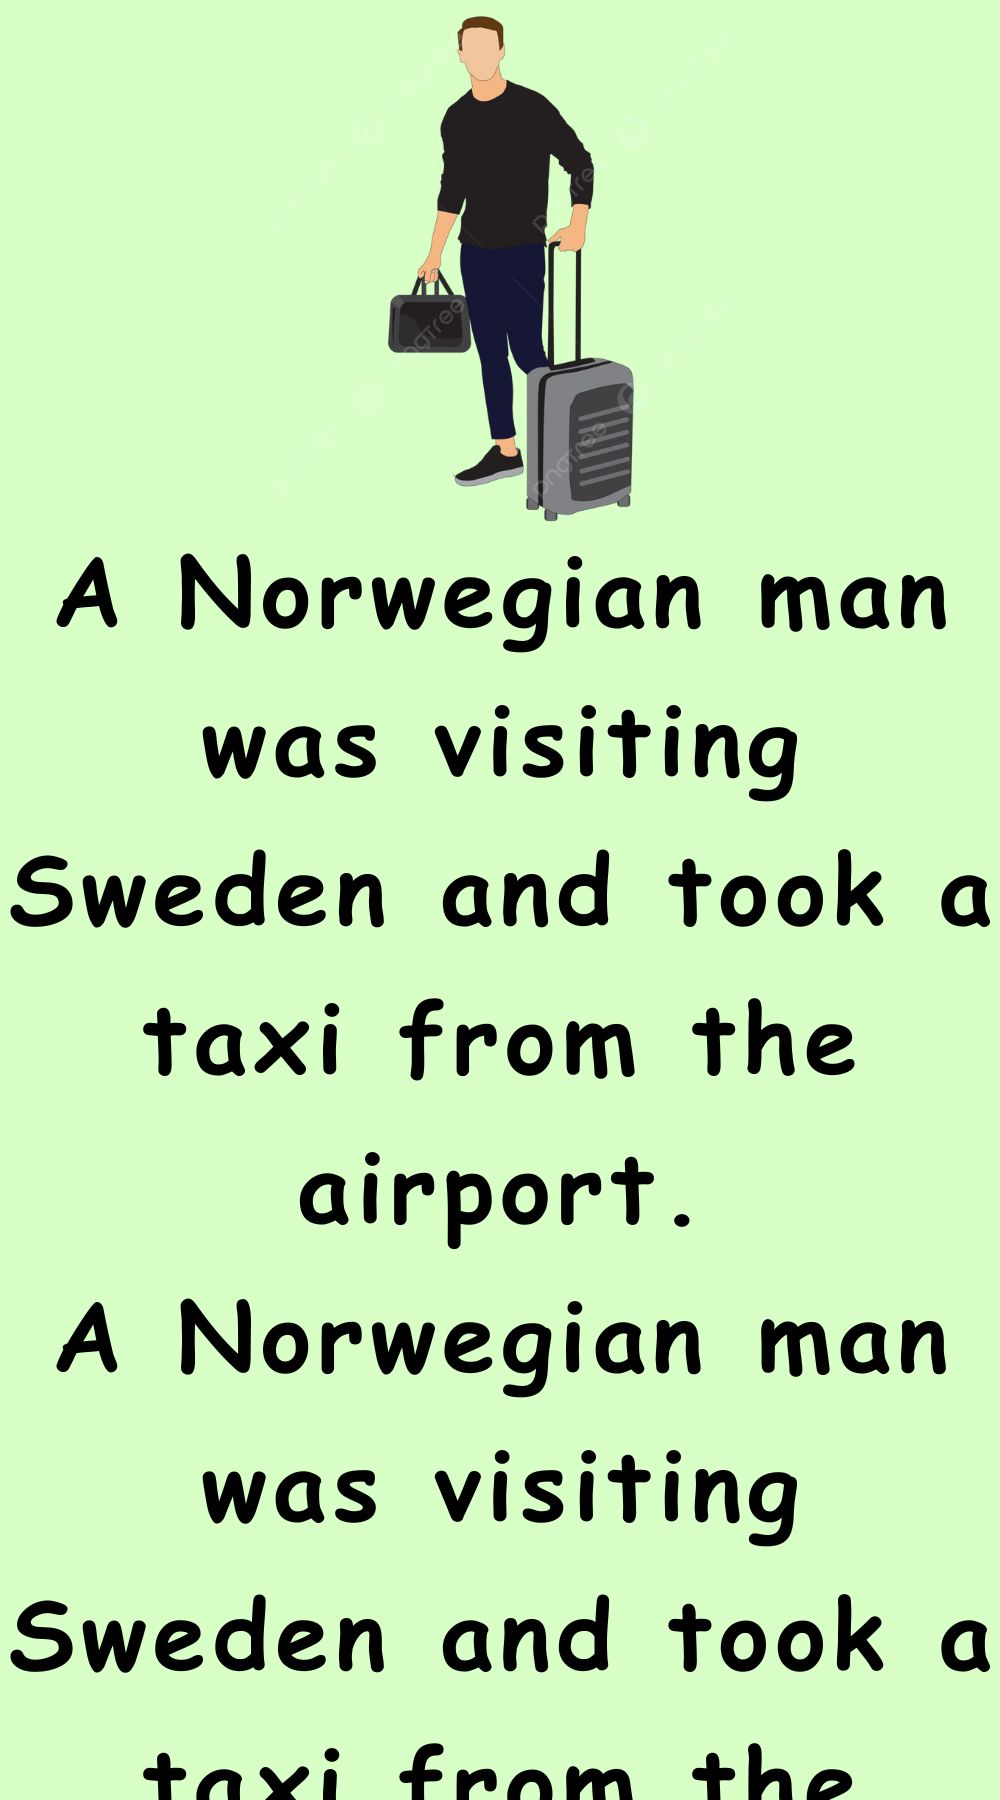 A Norwegian man was visiting Sweden